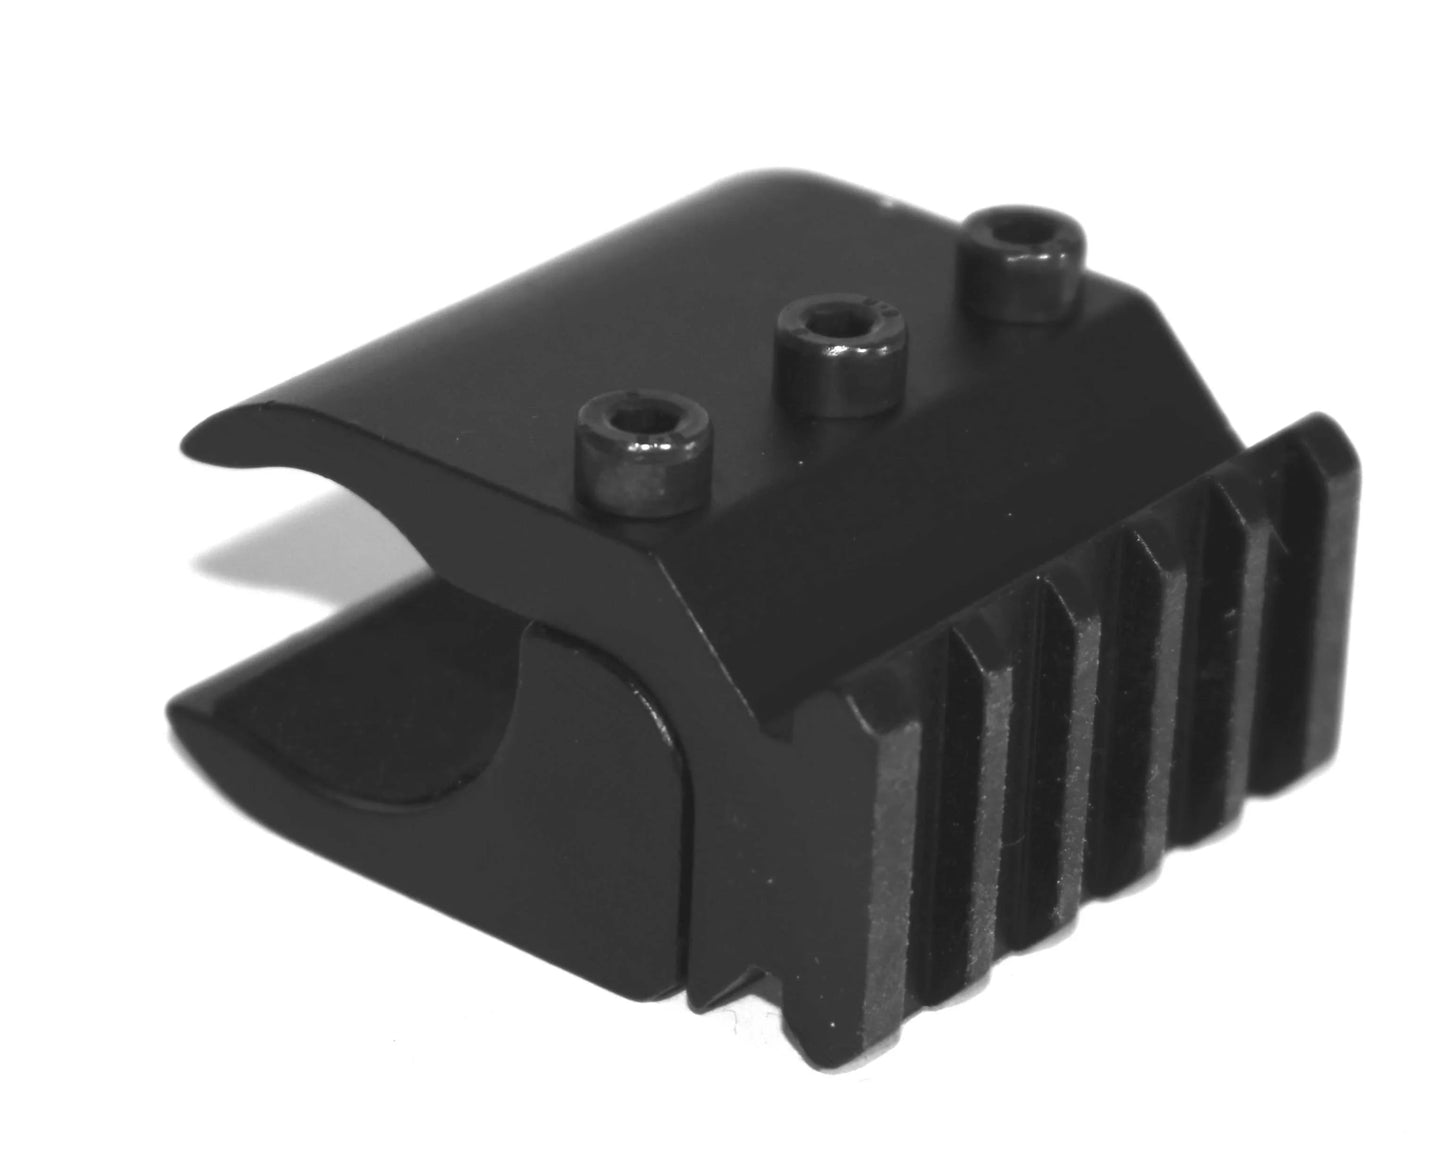 Stoeger M3K Freedom Series 3 magazine tube mount picatinny rail aluminum black. - TRINITY SUPPLY INC